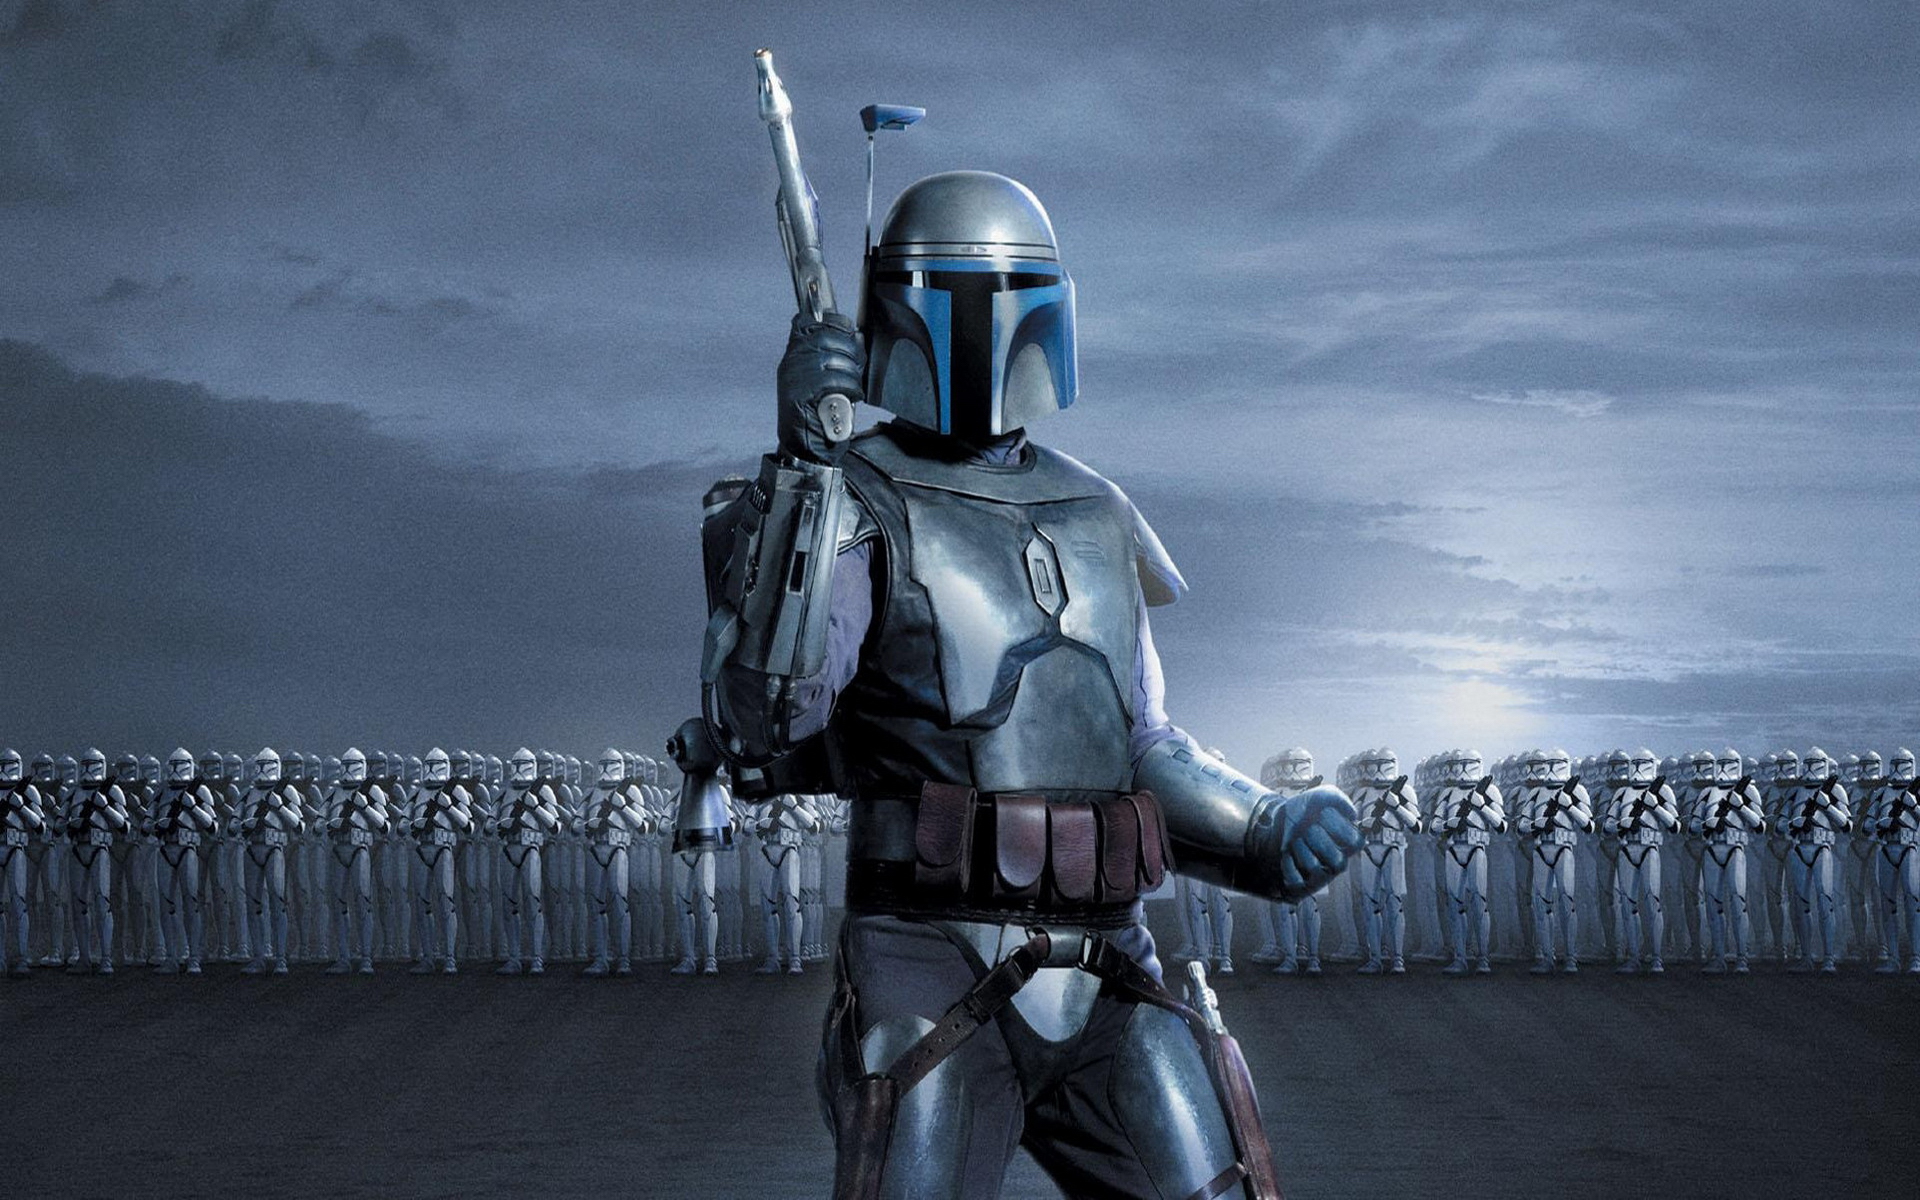 New Star Wars The Force Awakens Banner Spotlights First Order